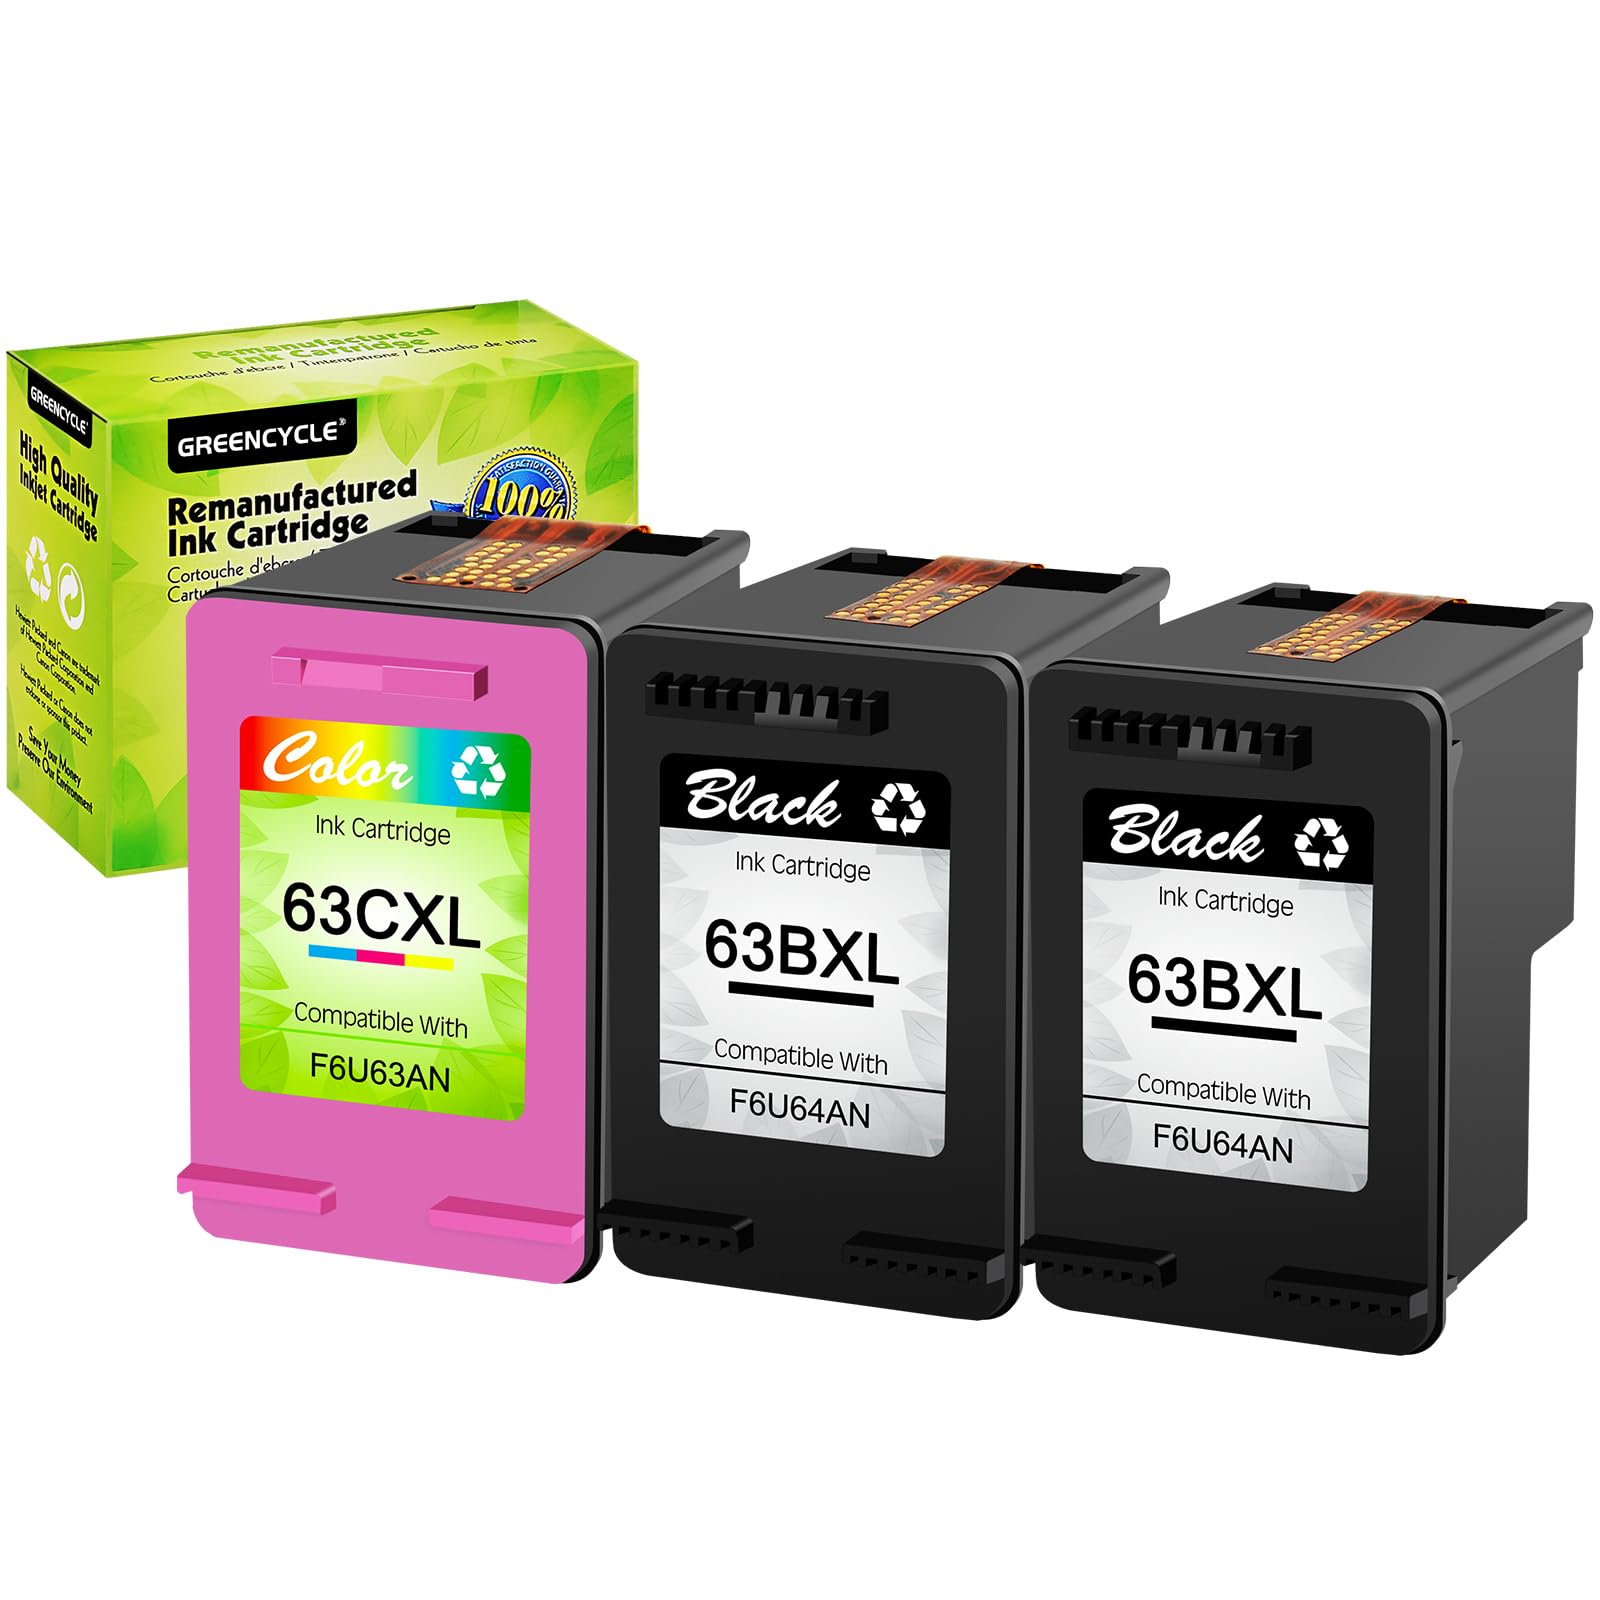 greencycle Re-Manufactured 63XL 63BXL 63CXL Ink Cartridge Compatible for HP Envy 4520 4510 OfficeJet 4650 3830 5255 5258 DeskJet 1110 2130 3636, with New Version chip (Black 2 Pack, Tir-Color 1 Pack)